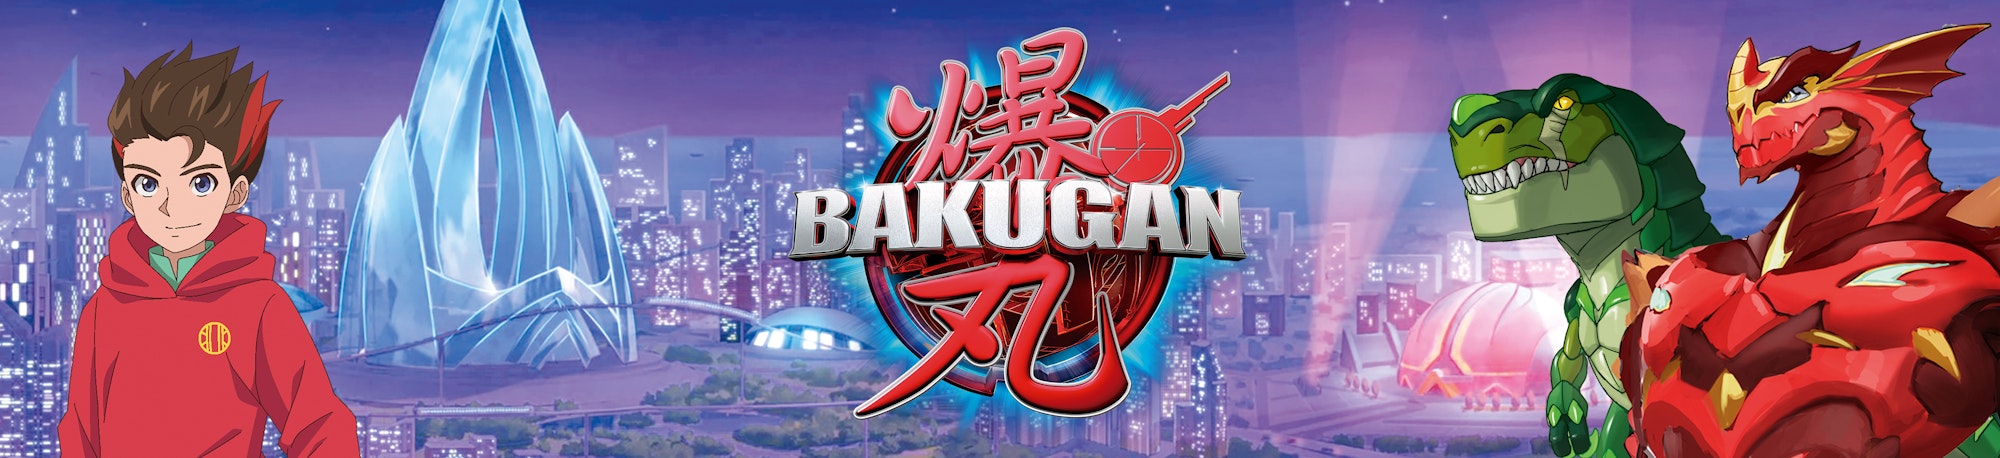 TOGGO zeigt »Bakugan 3.0« als deutsche TV-Premiere